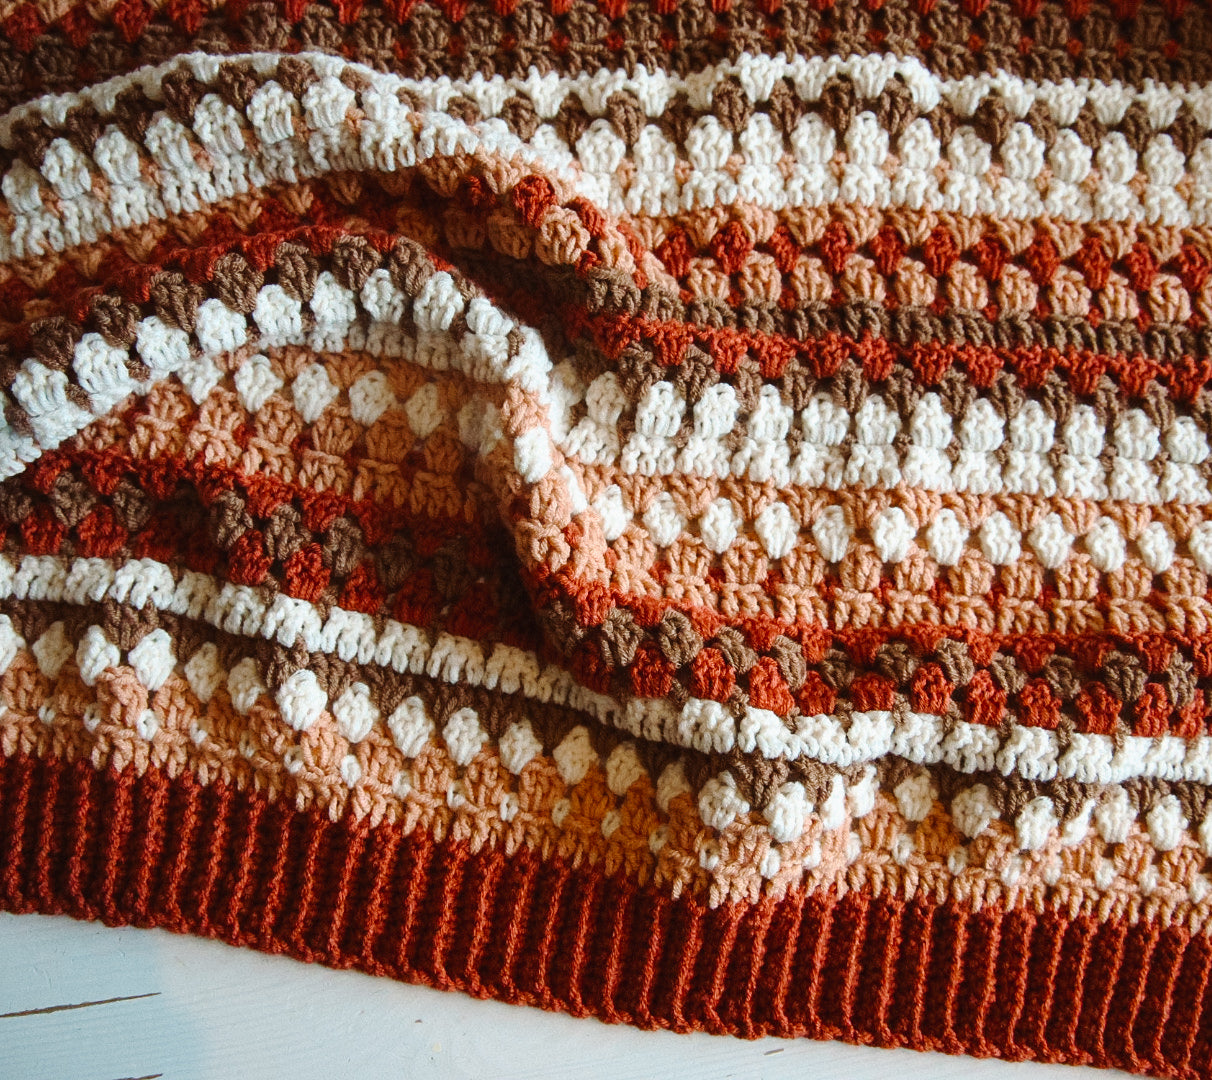 Riverbed Cardigan - Crochet Pattern